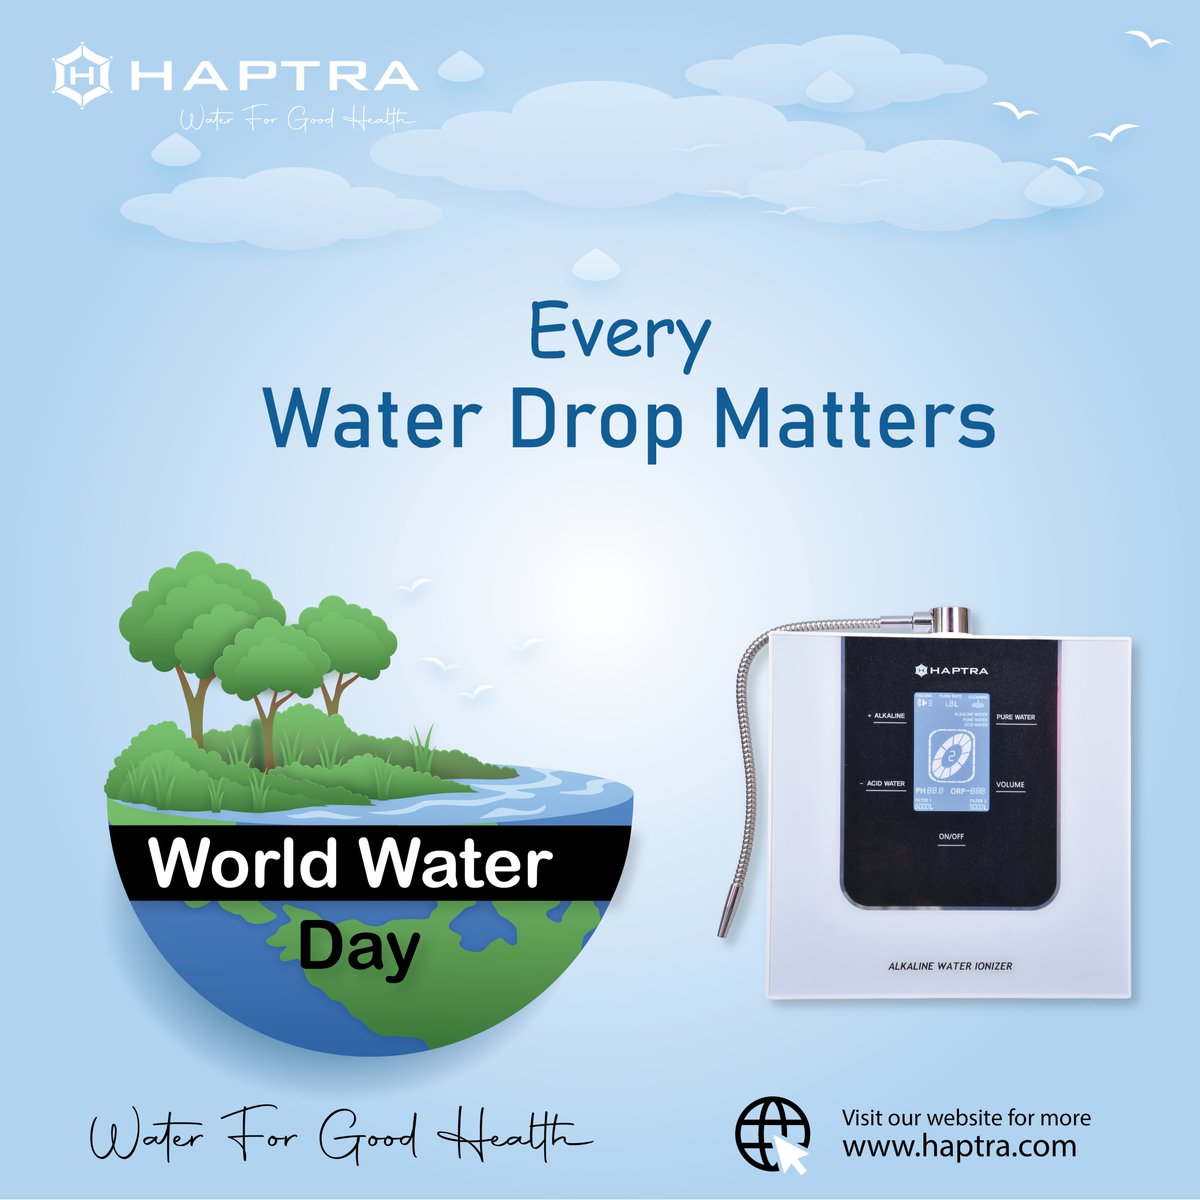 Every Water Drop Matters 

#HaptraIndia #PureWater #worldwaterday #beautiful #waterday #WaterForGoodHealth #Haptra #strongbones #IonizedWater #WaterIonizer #Health #AlkalineWater #FitIndia #bestquality #HealthyFamily #HappyCustomers